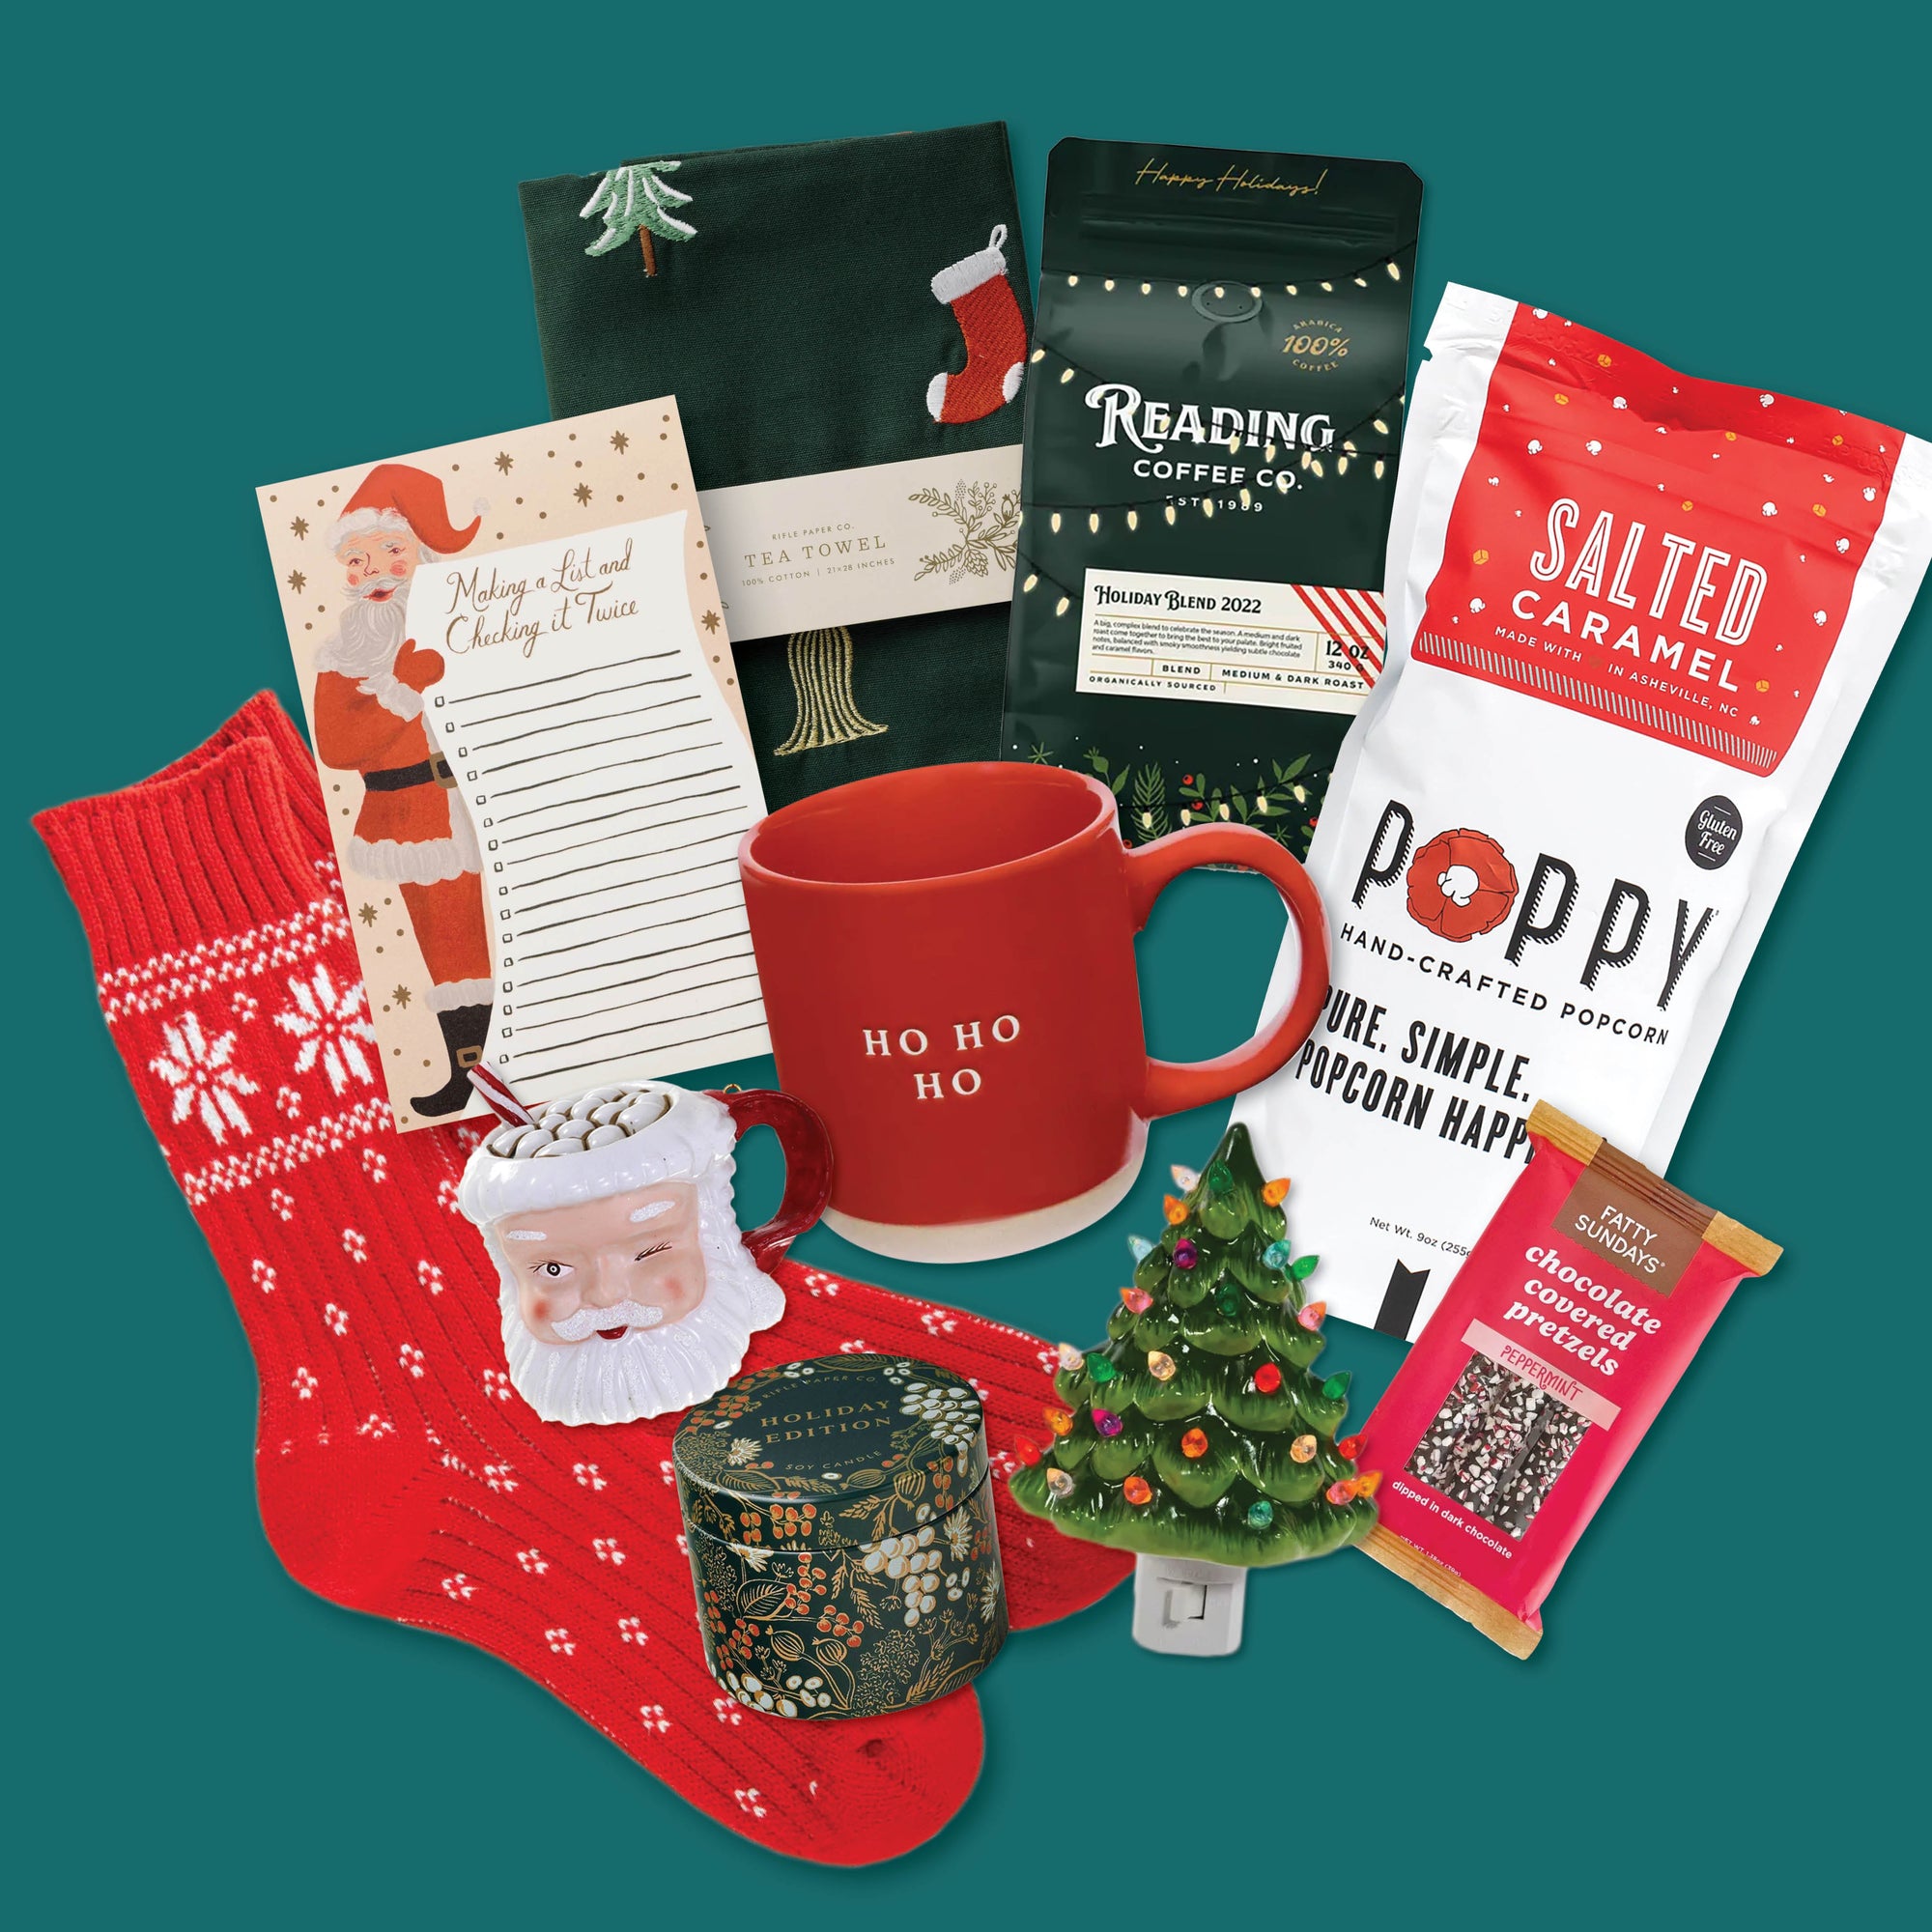 Celebrate the season with cheerful holiday mugs